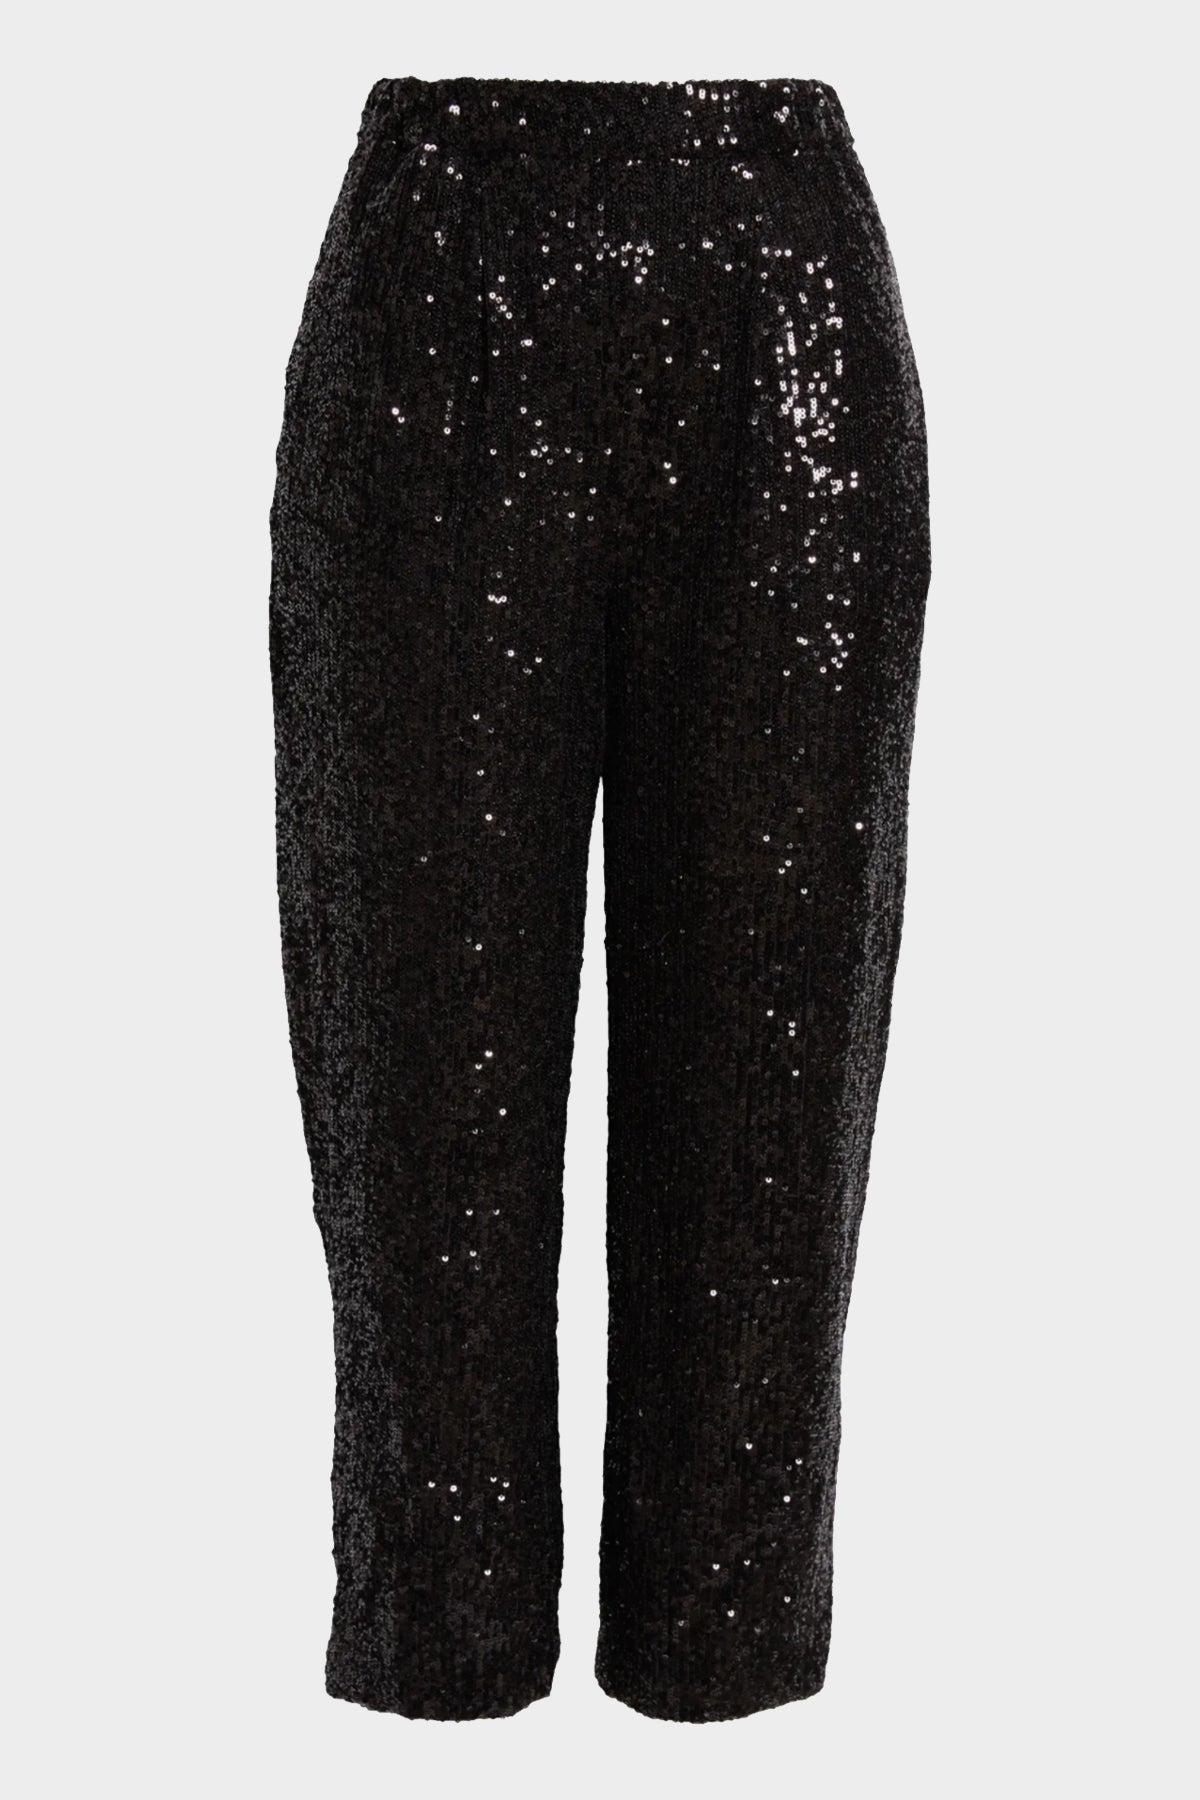 Black Sequin Pajama Pants